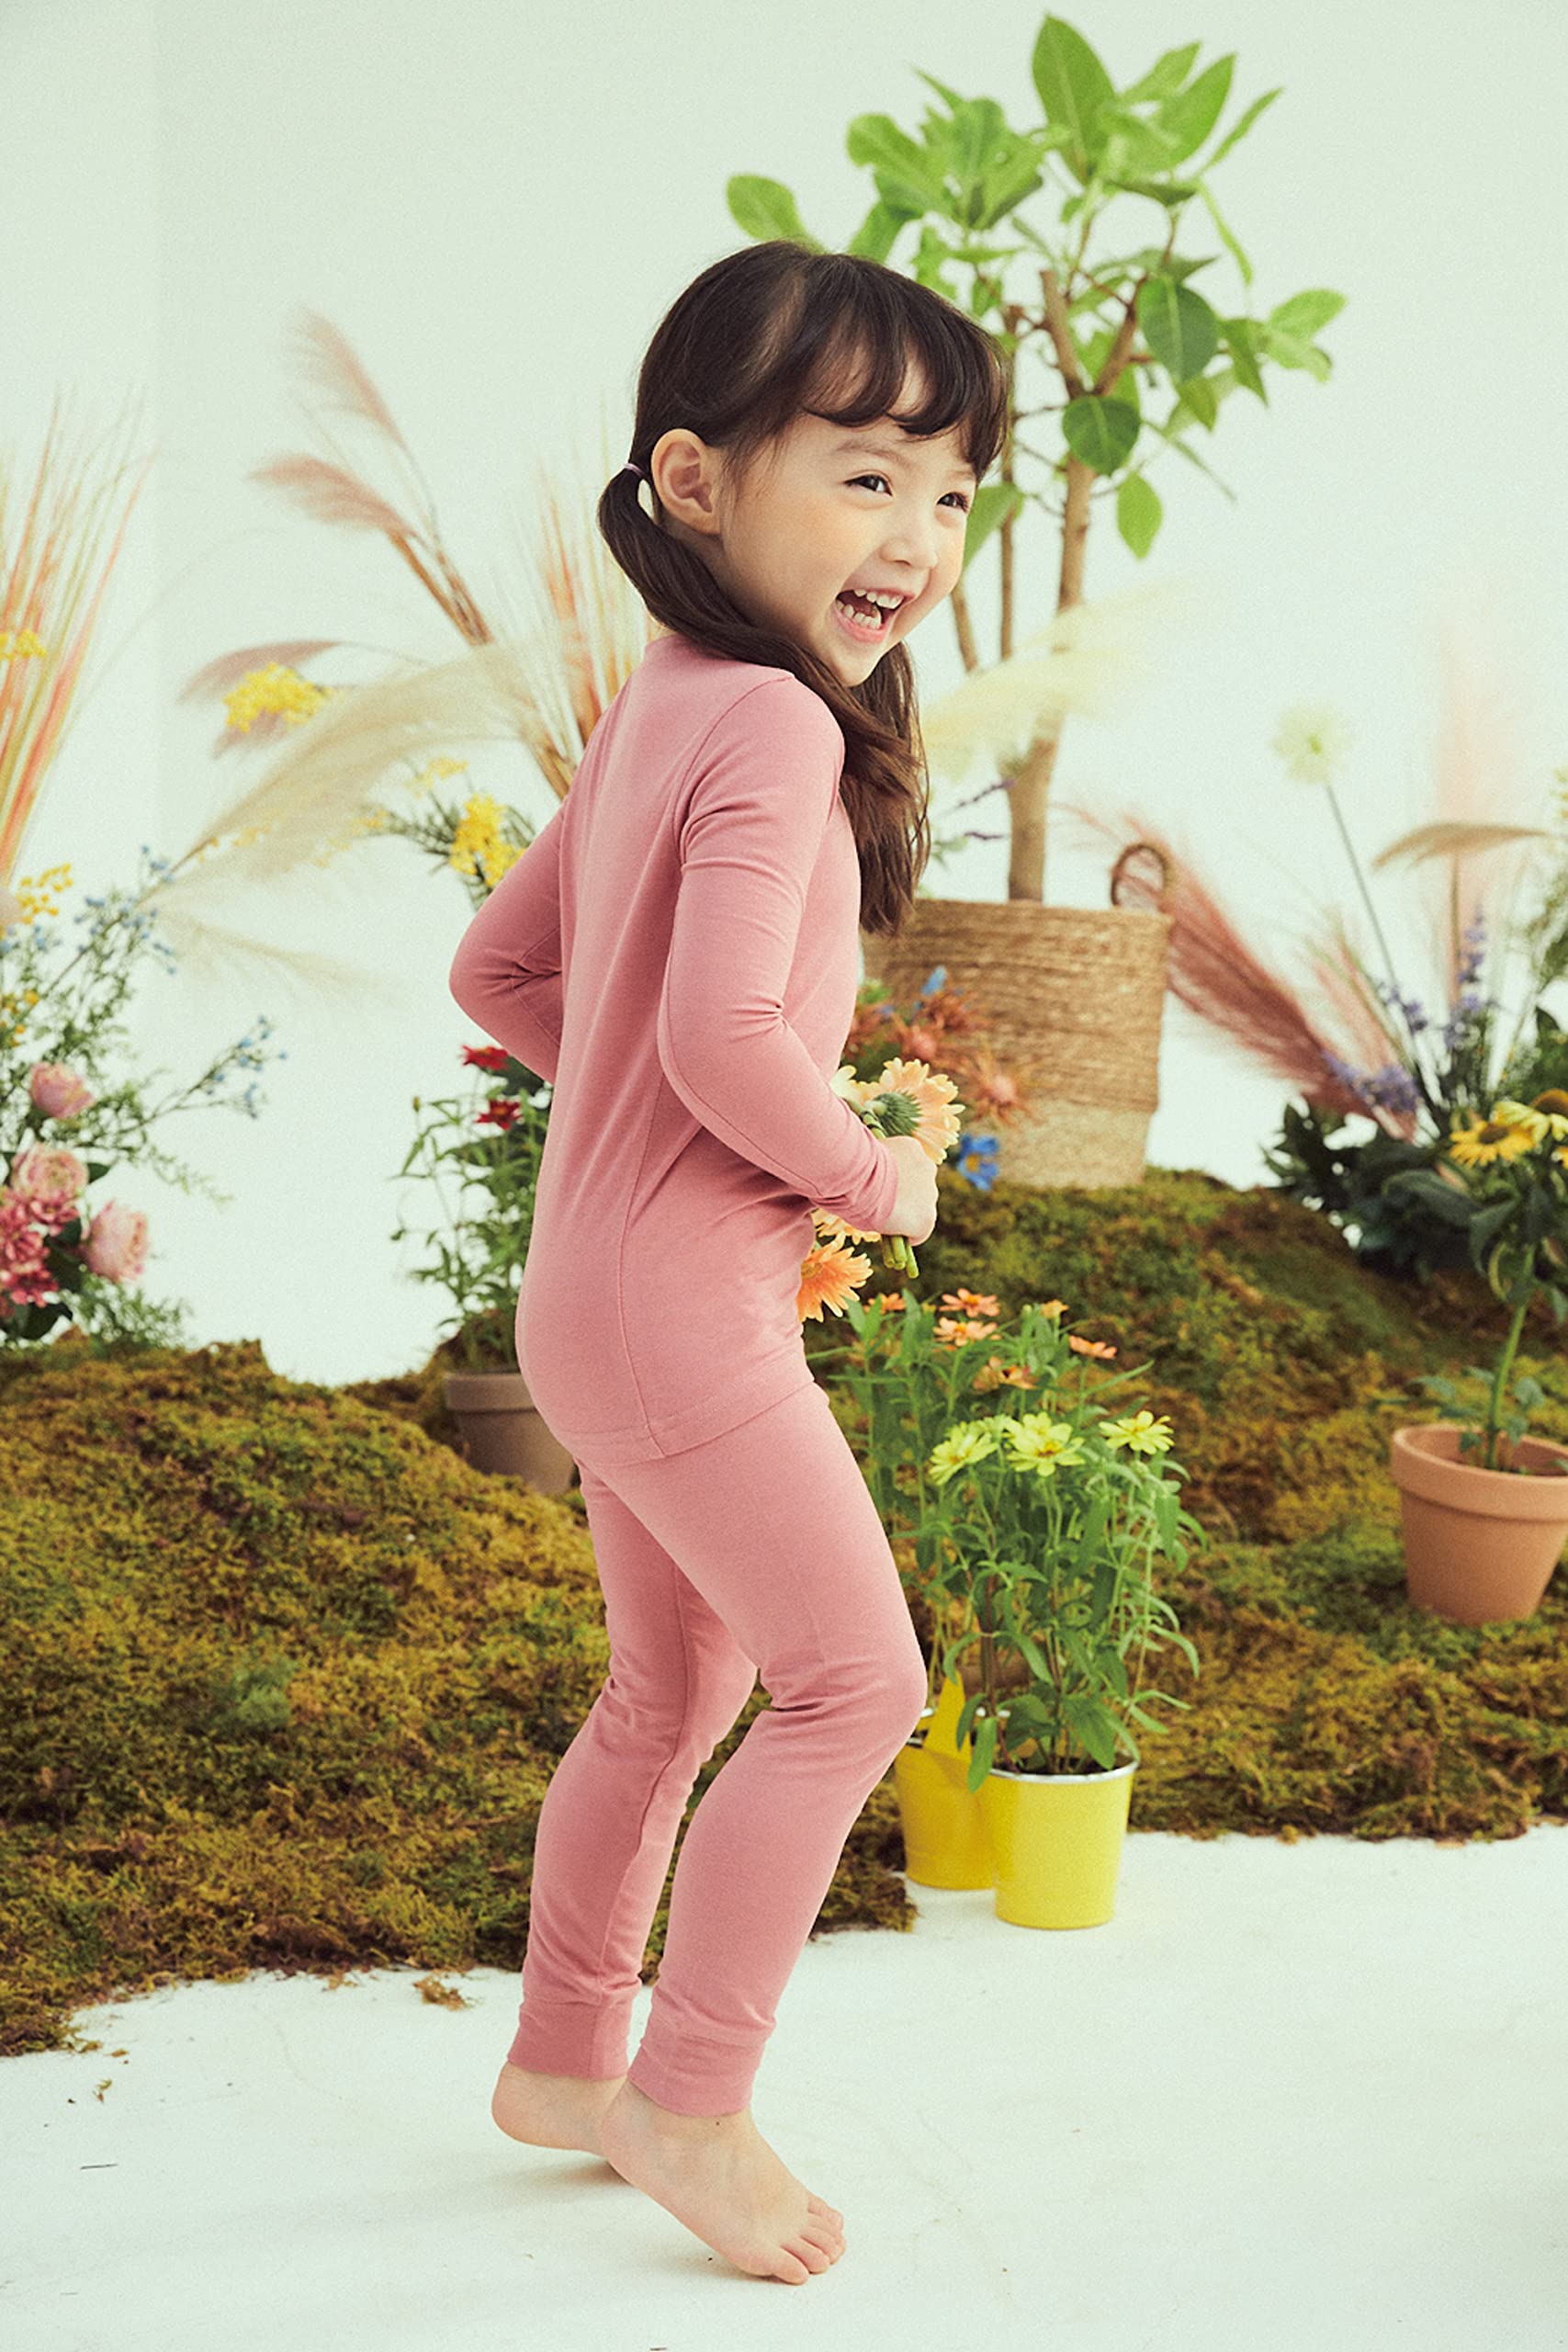 moimoln Baby Toddler Girls Boys Unisex lightweight cool summer Viscose Snug fit Pjs Pajama Sleepwear 12m-5T